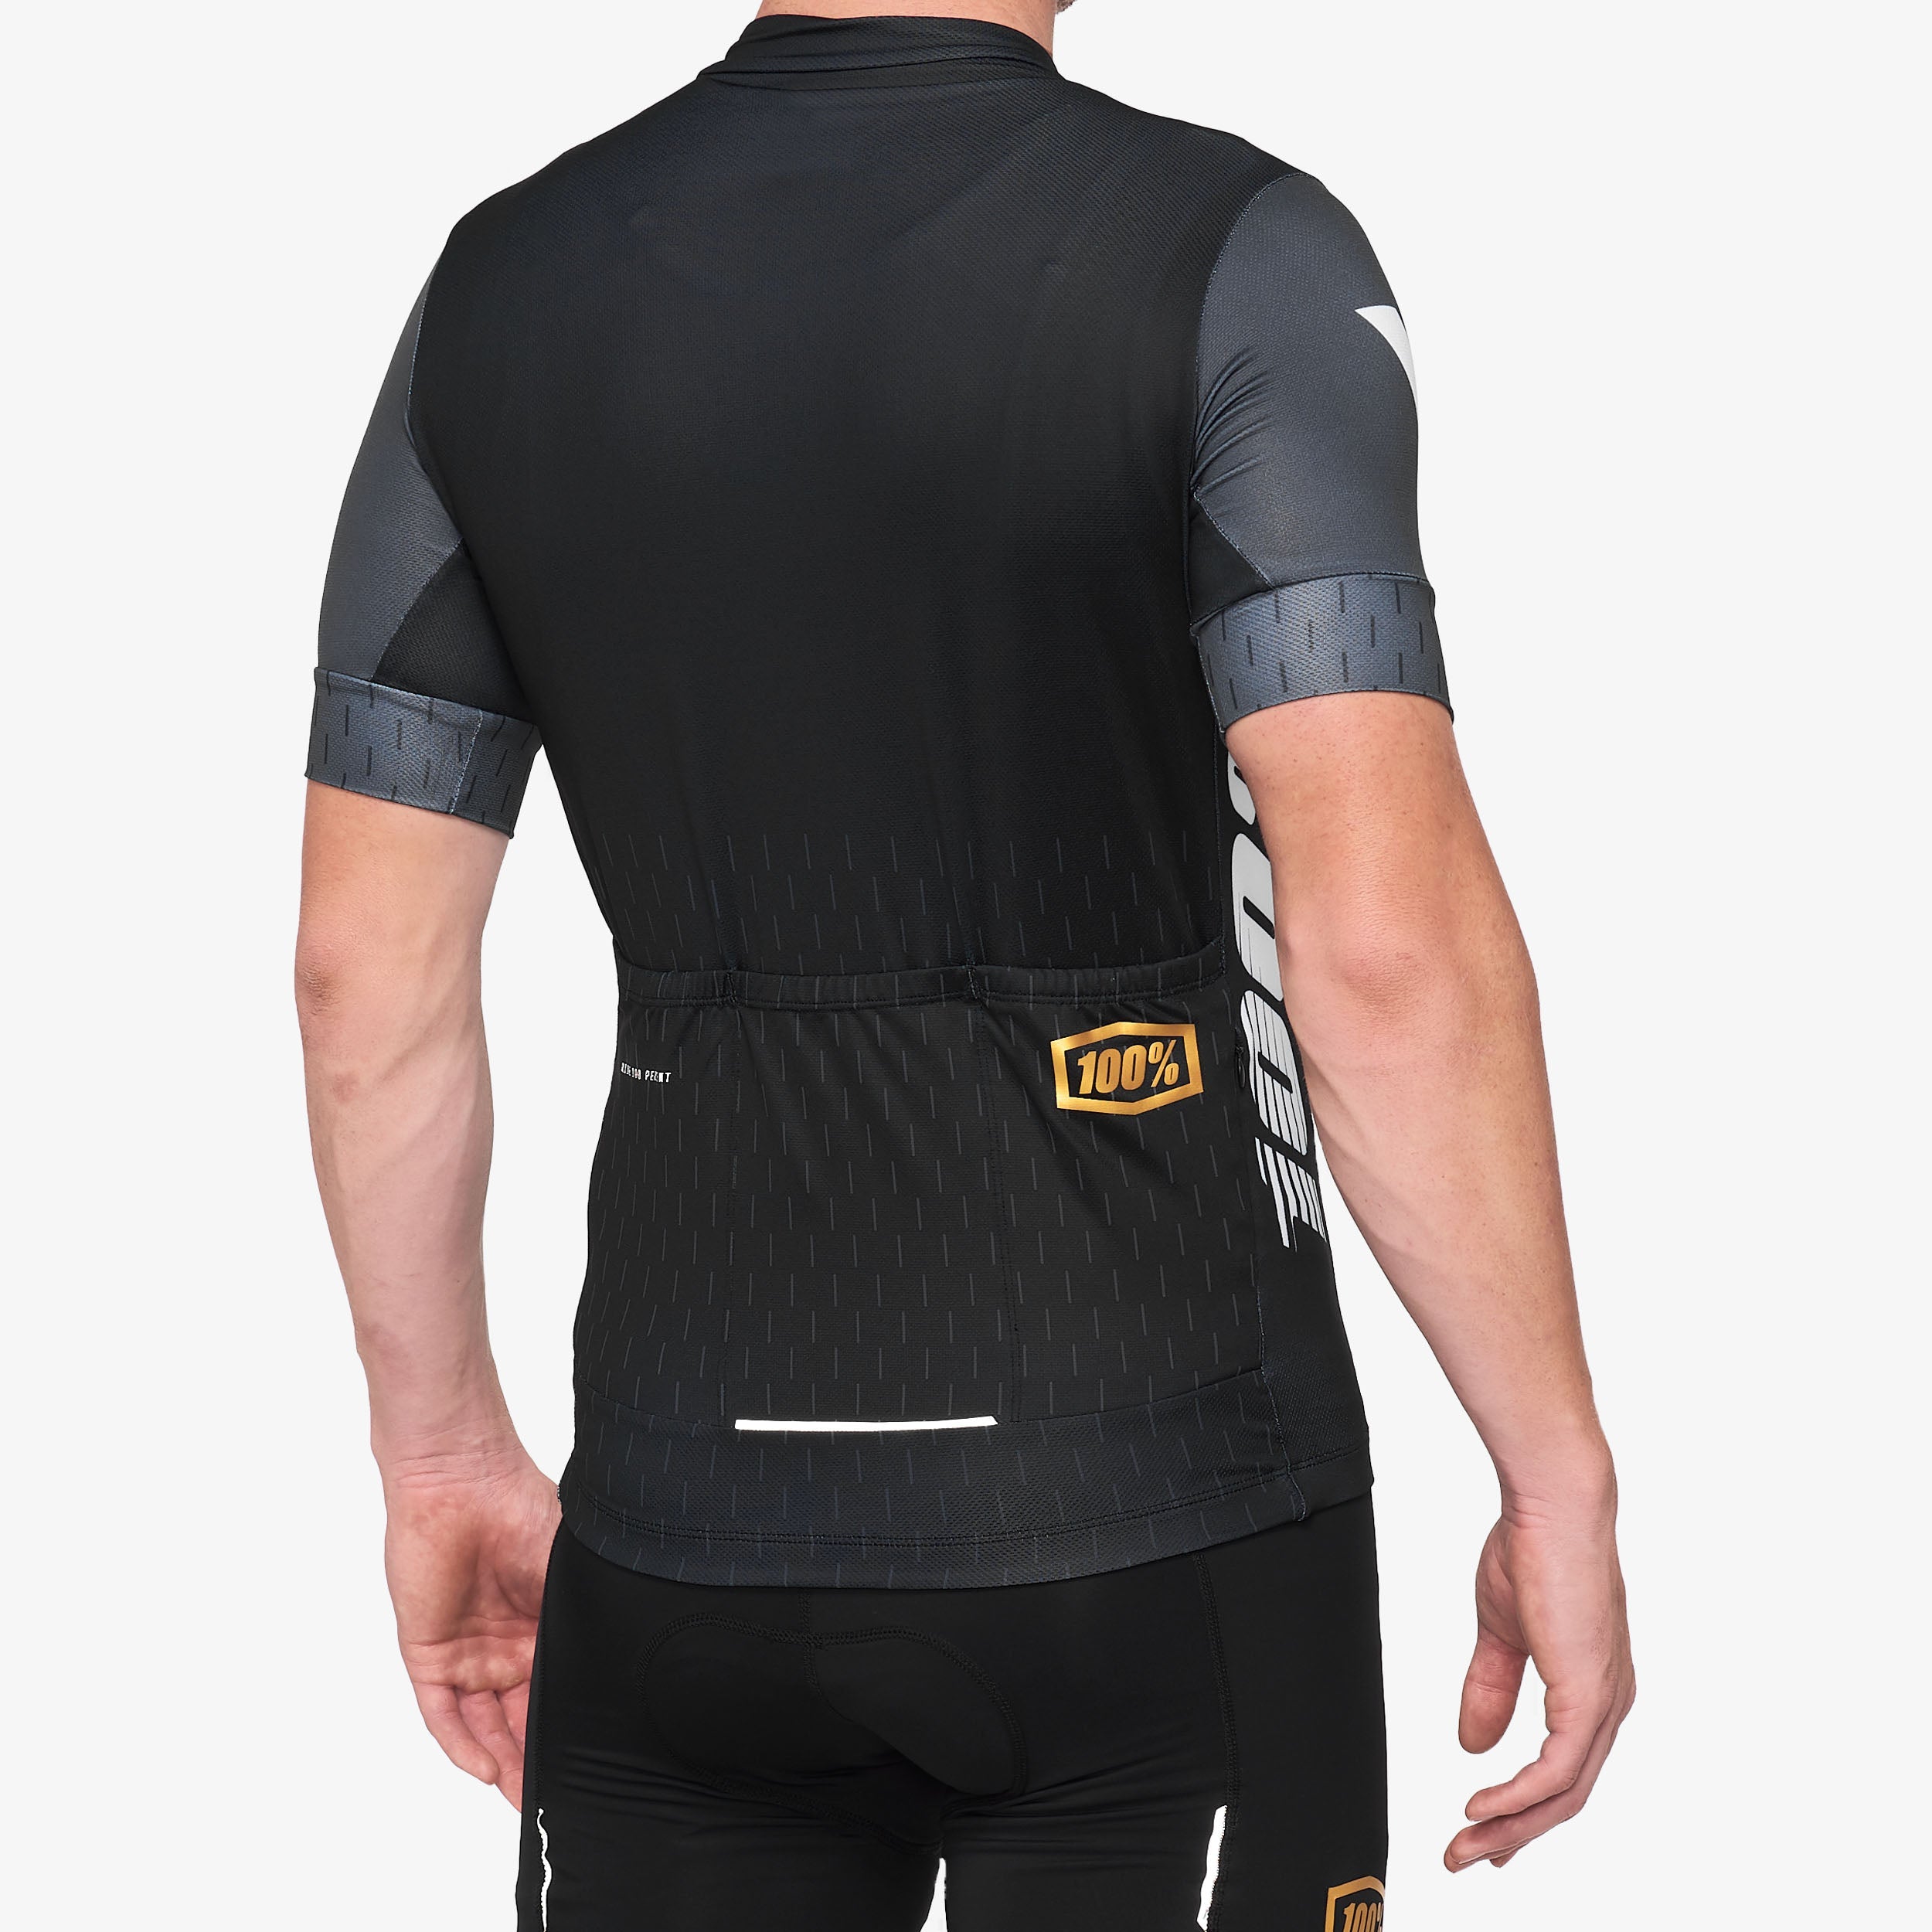 EXCEEDA Short Sleeve Jersey Black/Charcoal - Secondary